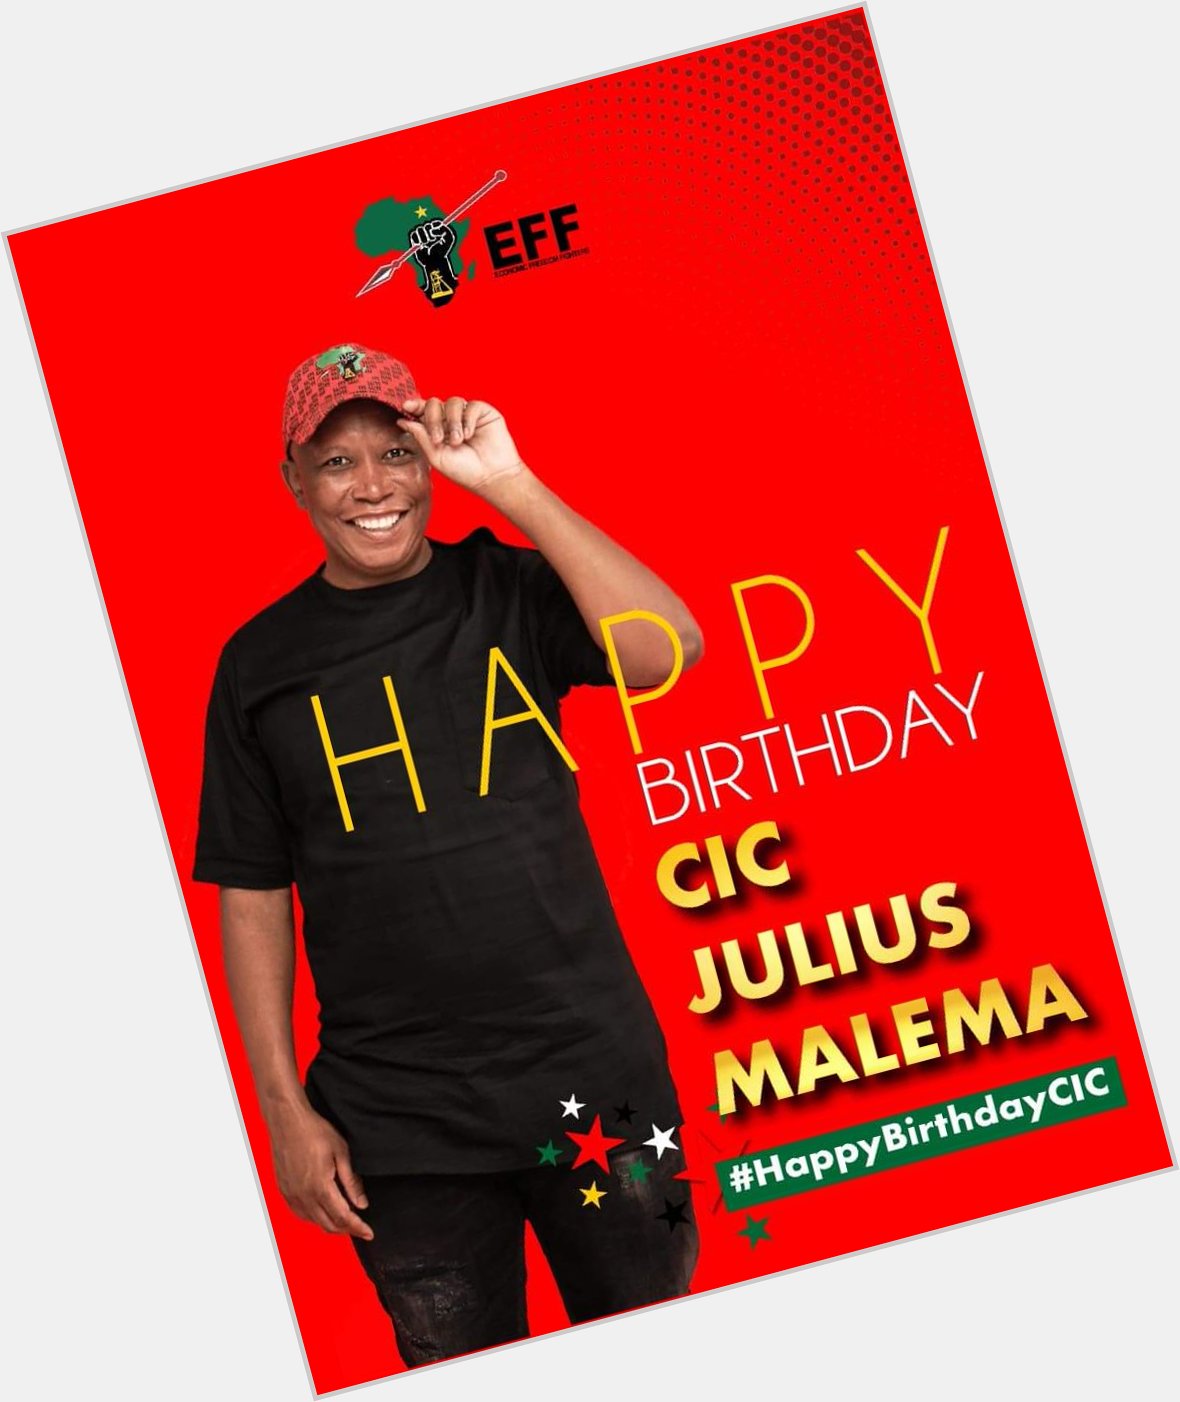 Happy birthday cic Julius malema 